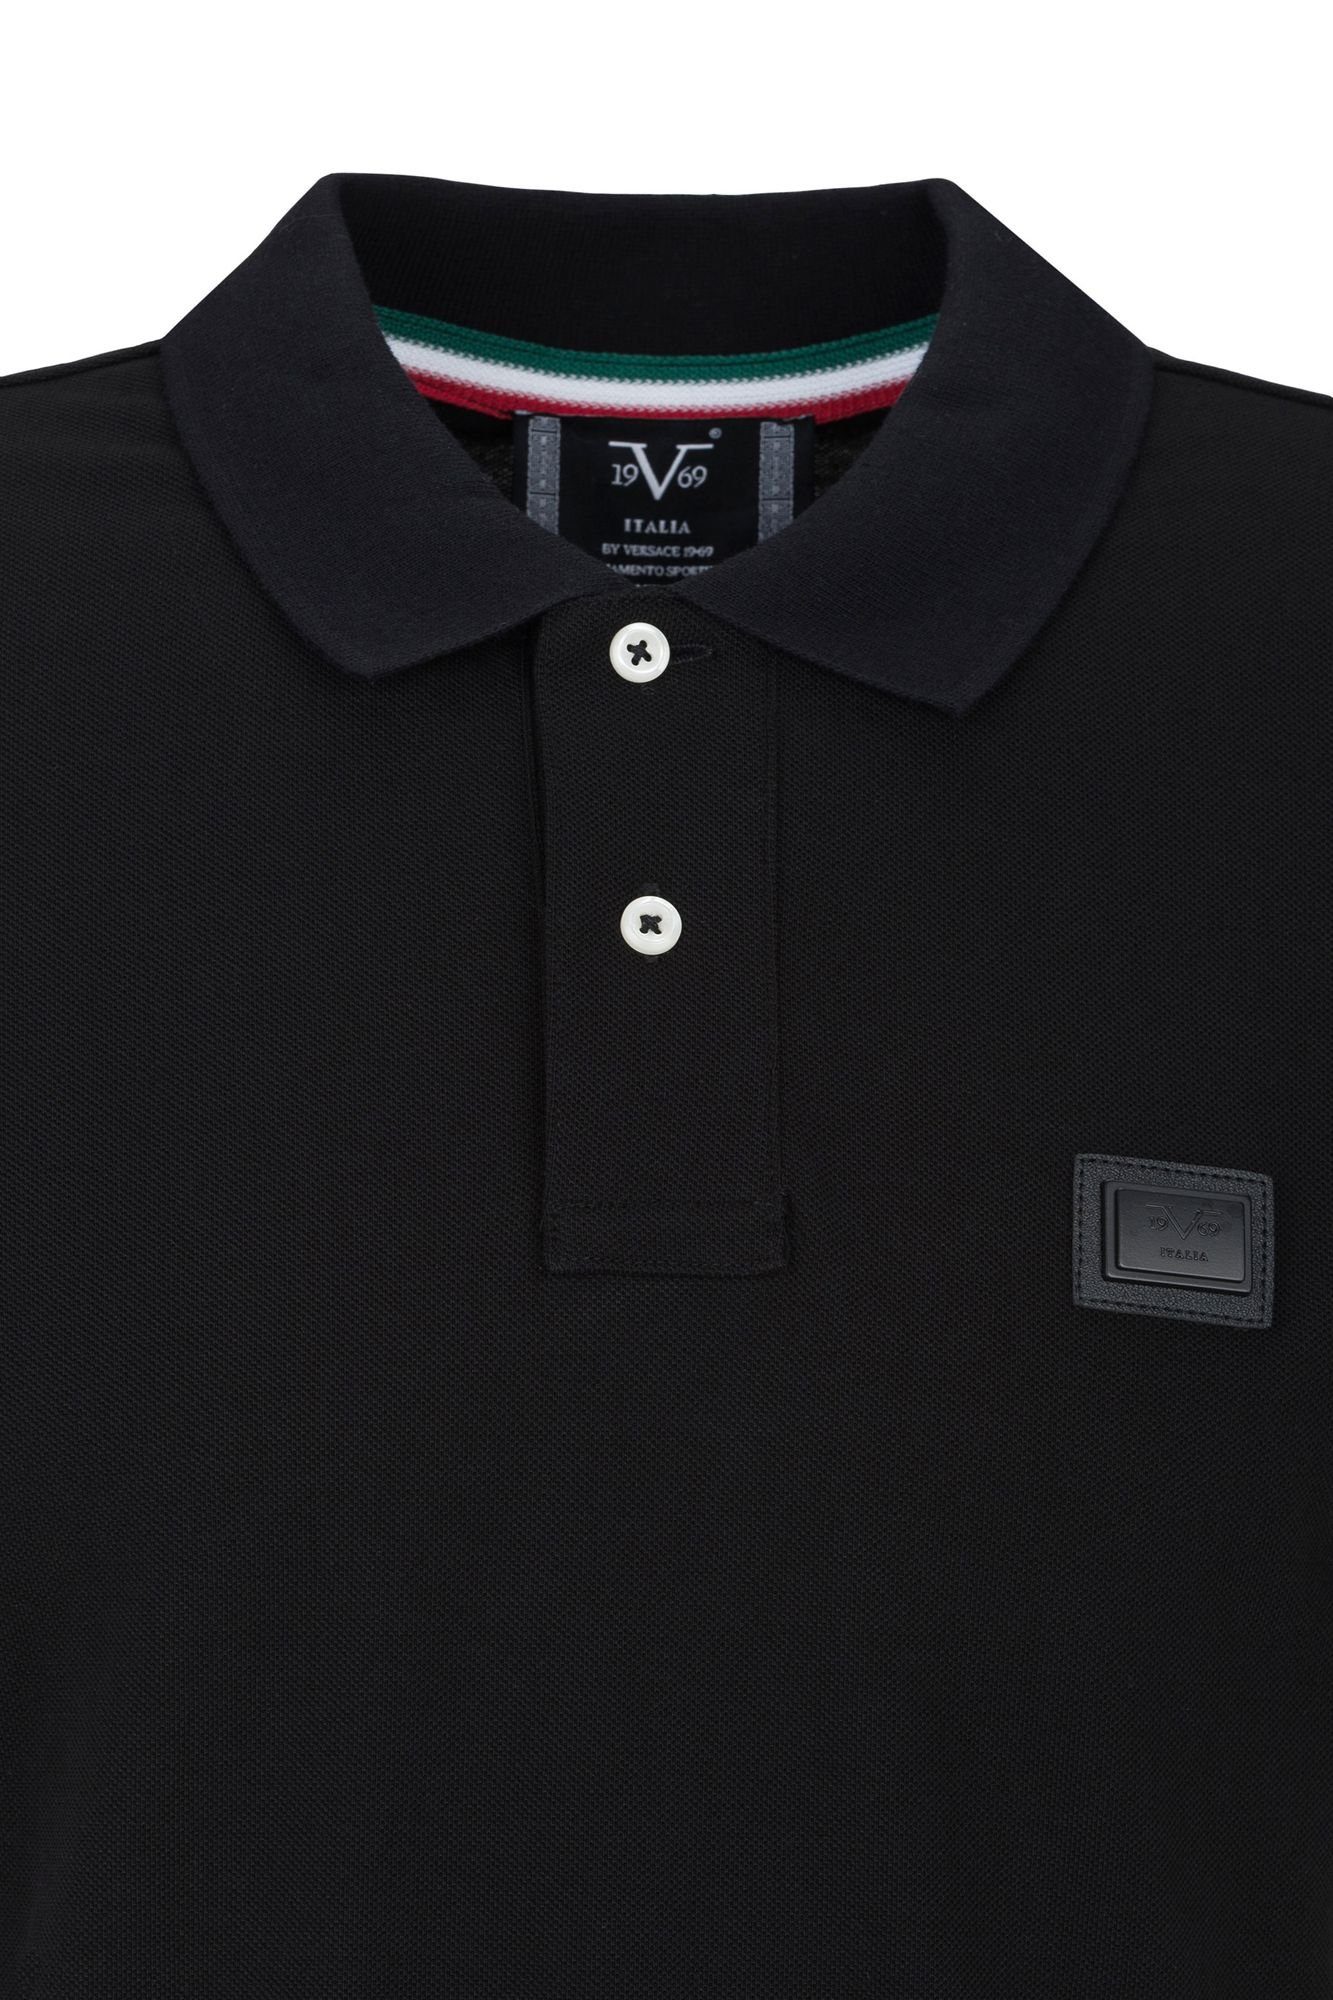 by Emilio by SRL Sportivo Versace Versace Italia - 19V69 Poloshirt